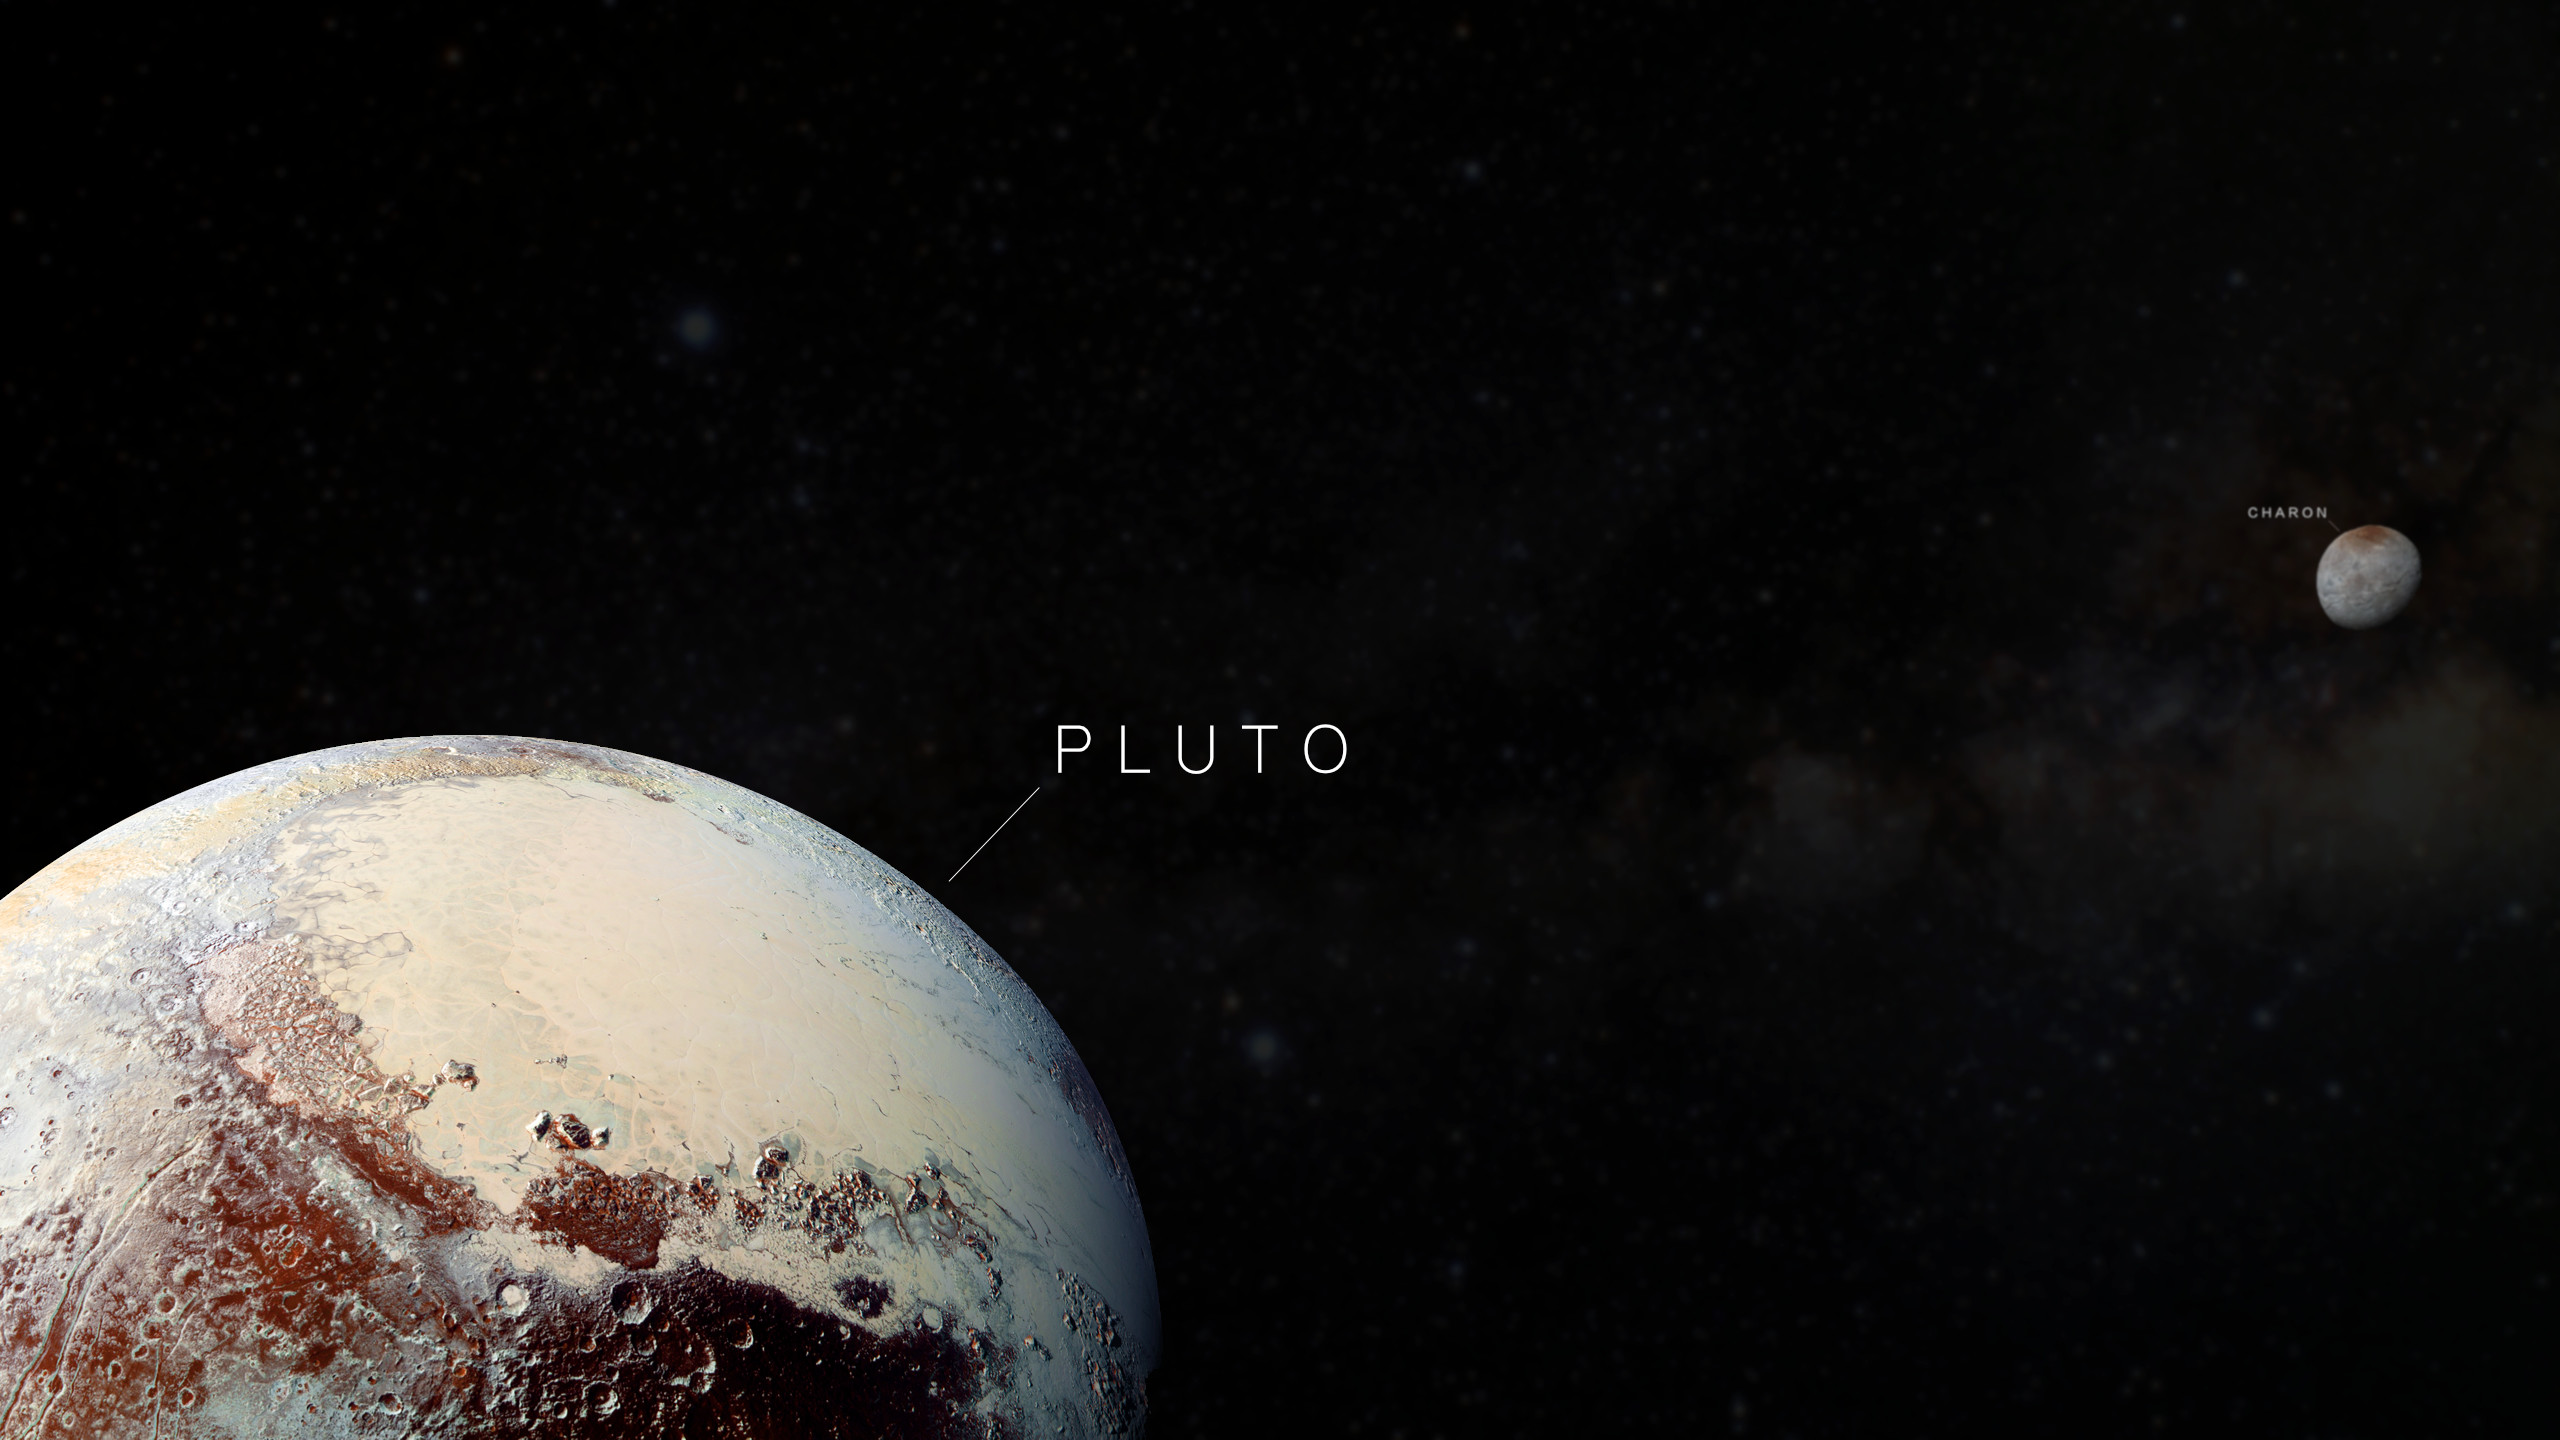 2560x1440 Pluto/Charon wallpaper